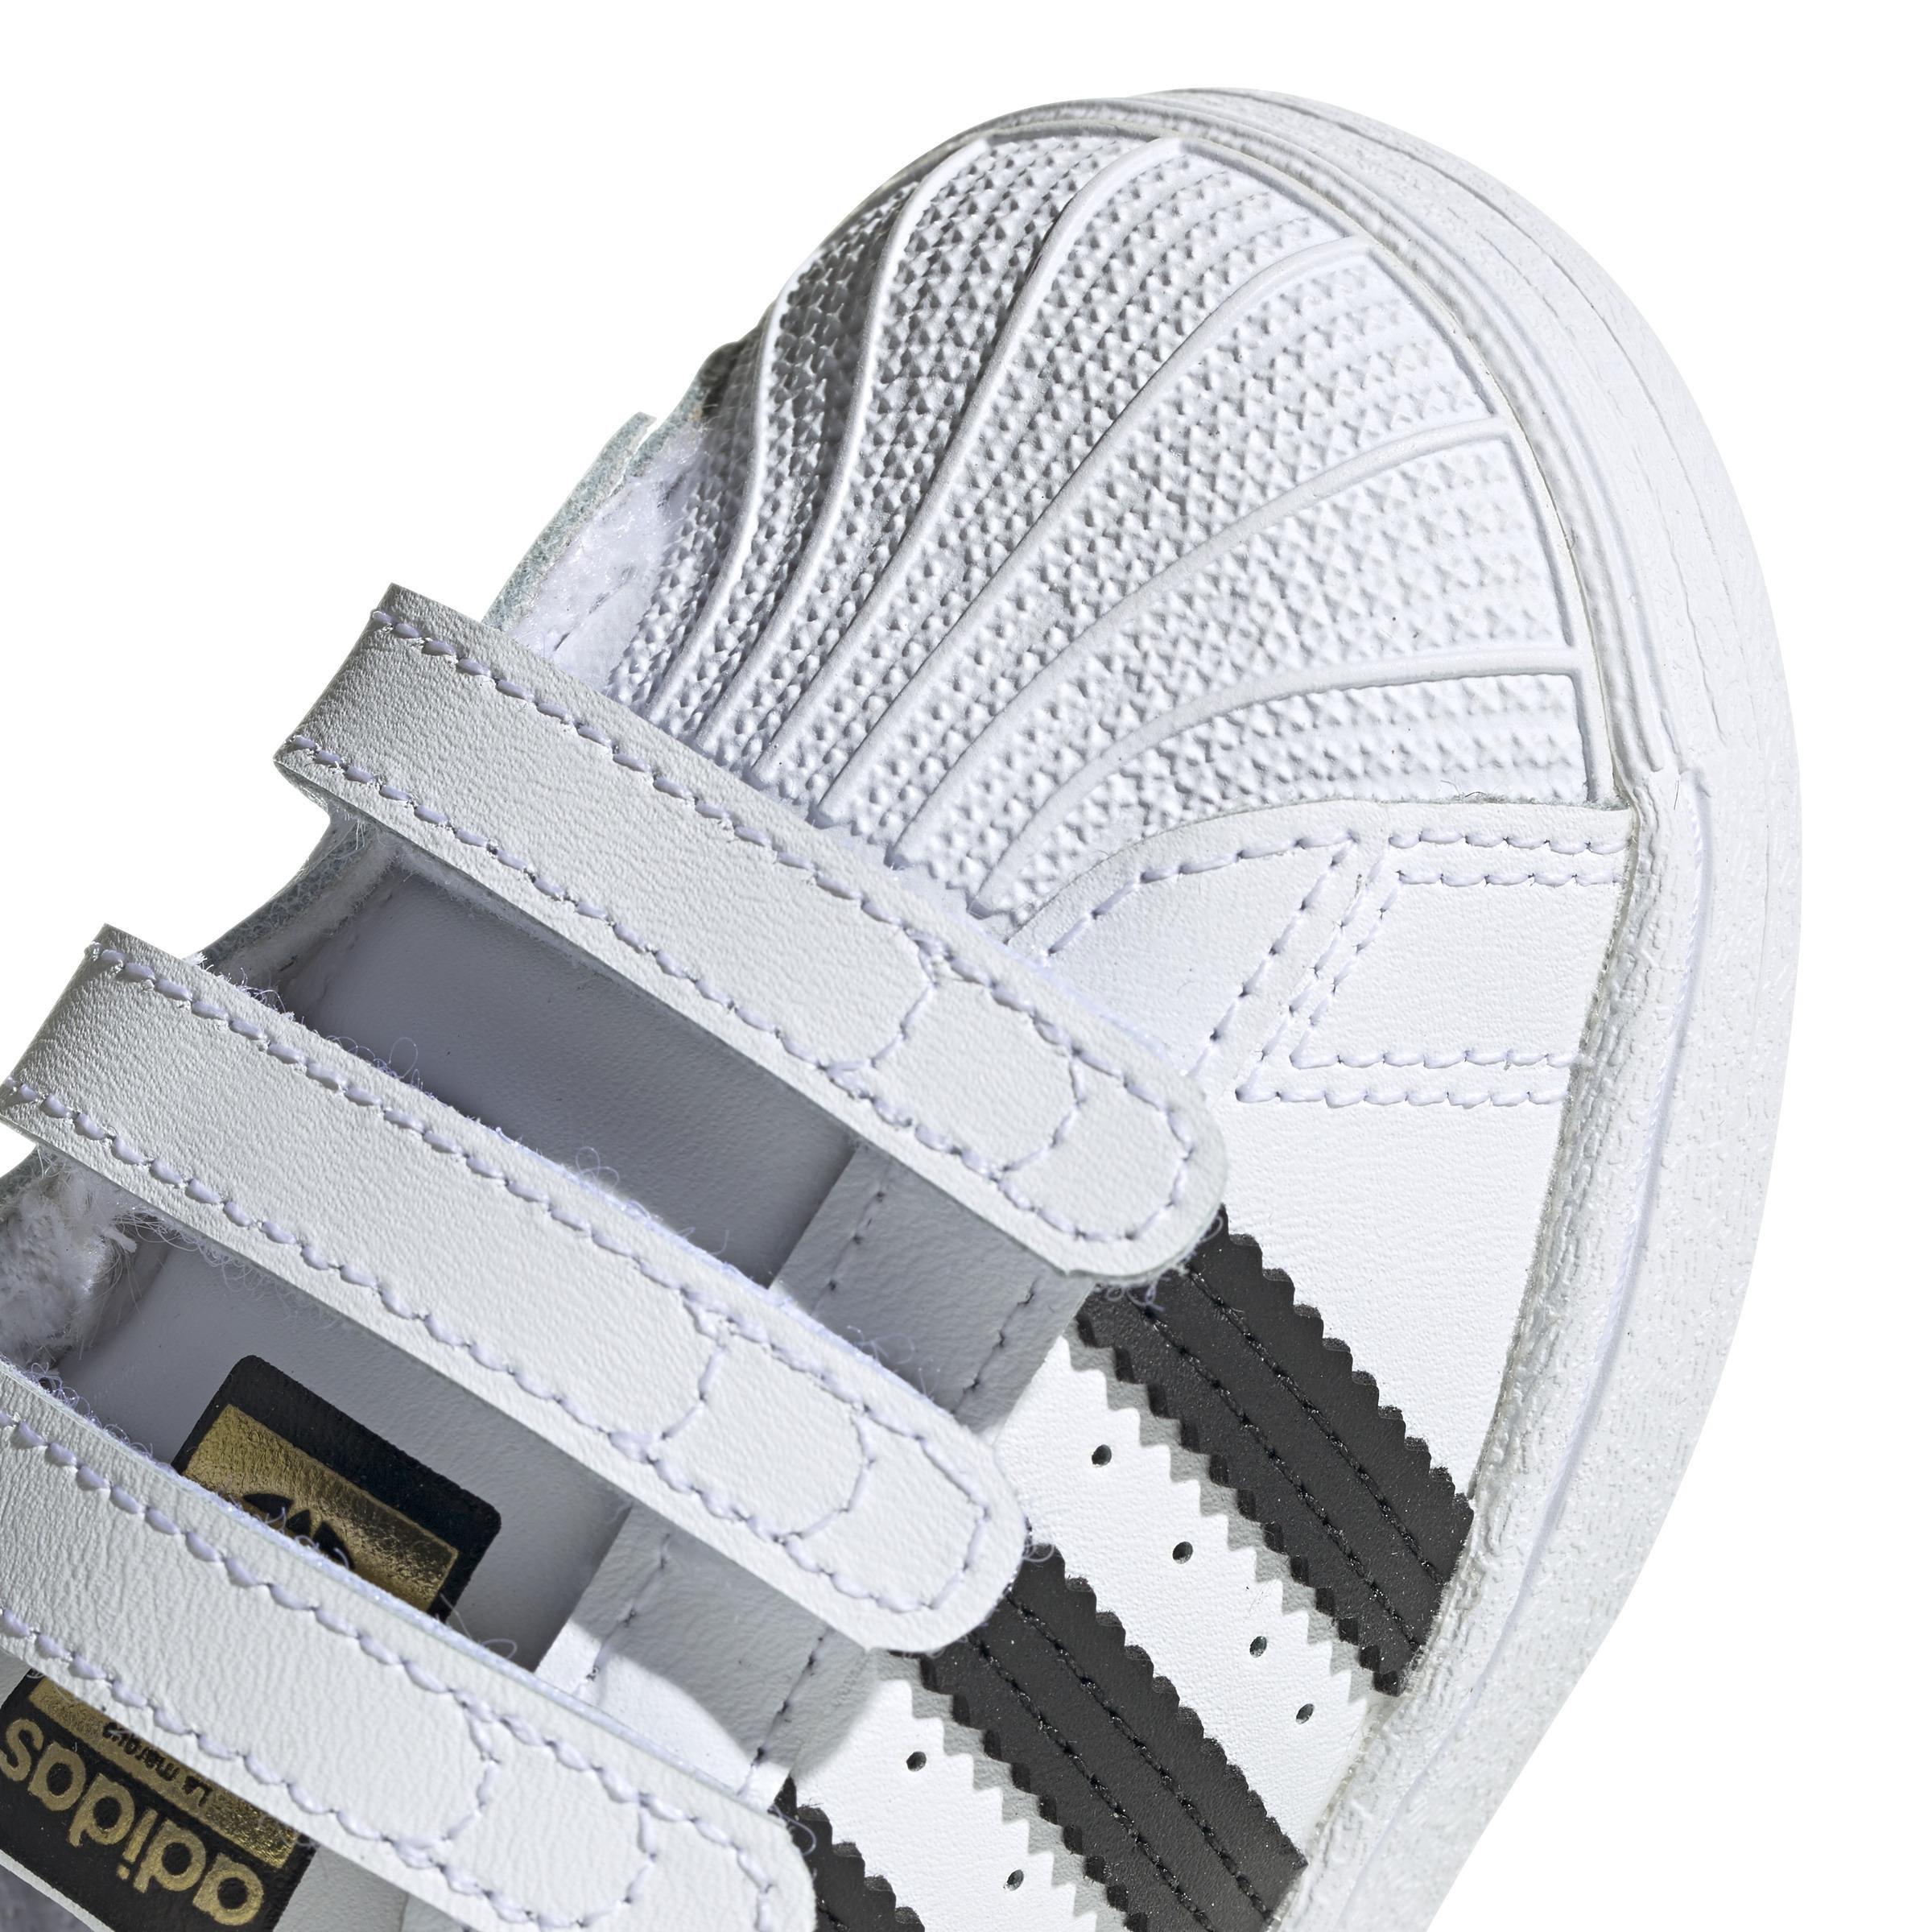 adidas - Baby Unisex Superstar Shoes, White